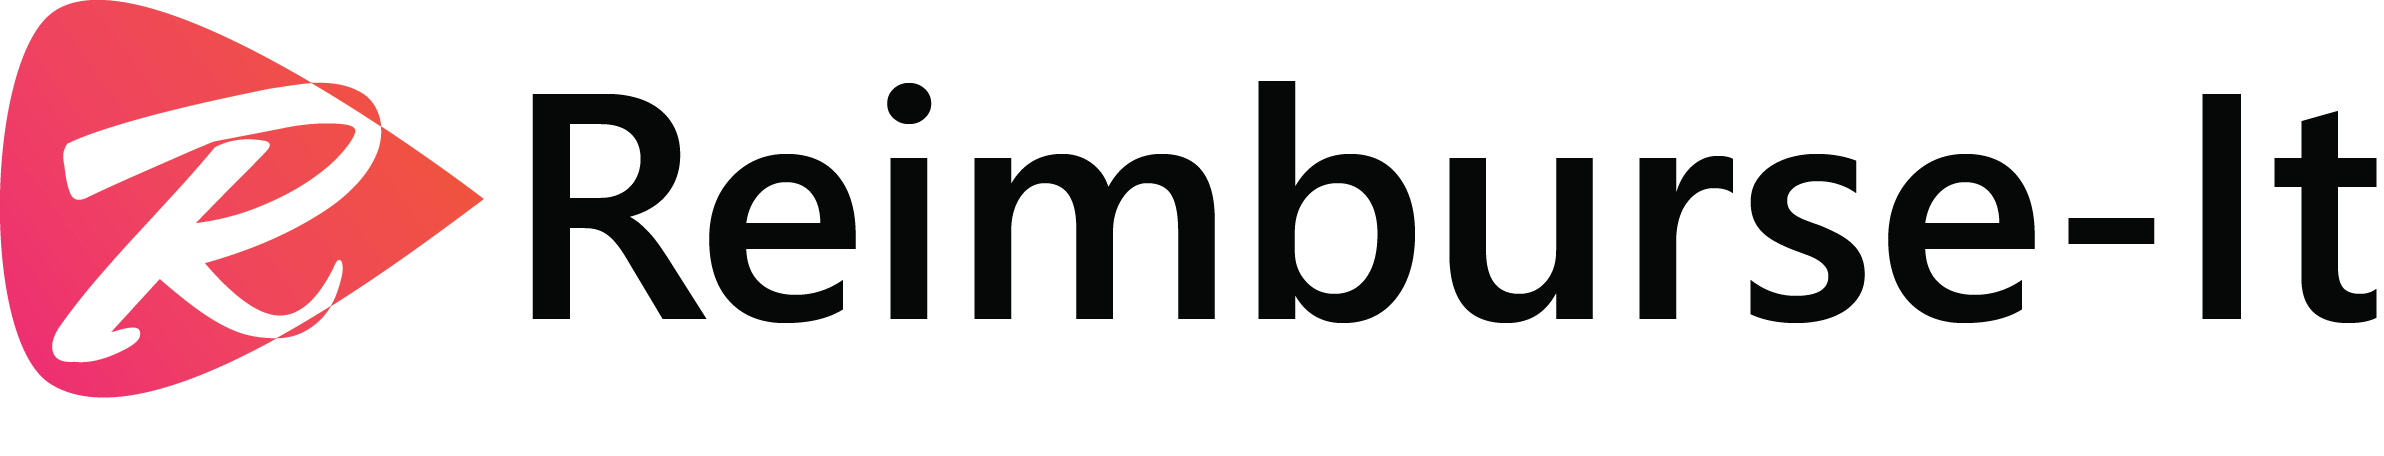 Reimburse-It Logo